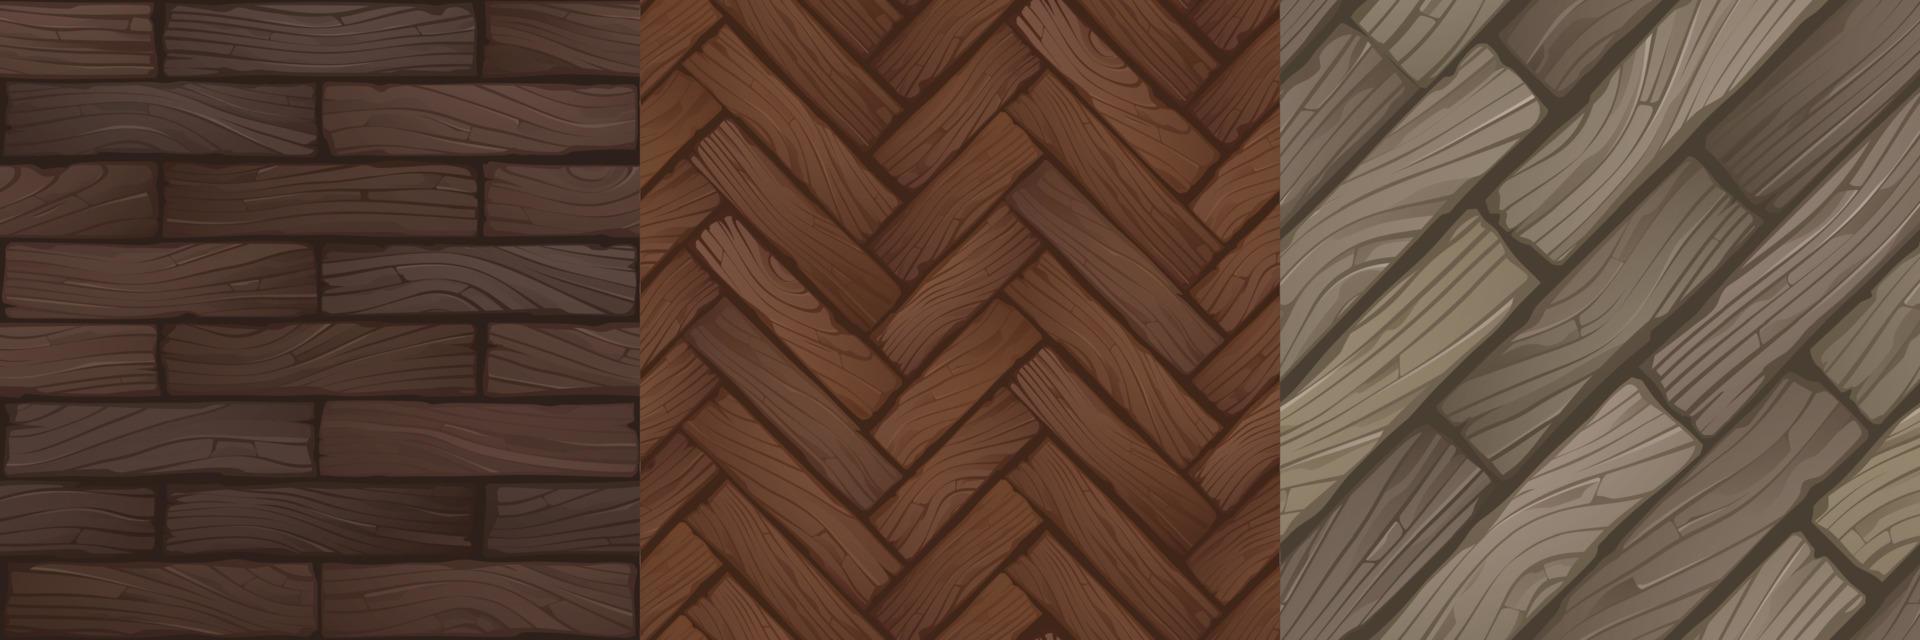 texturas de parquet de madeira, piso de madeira vetor